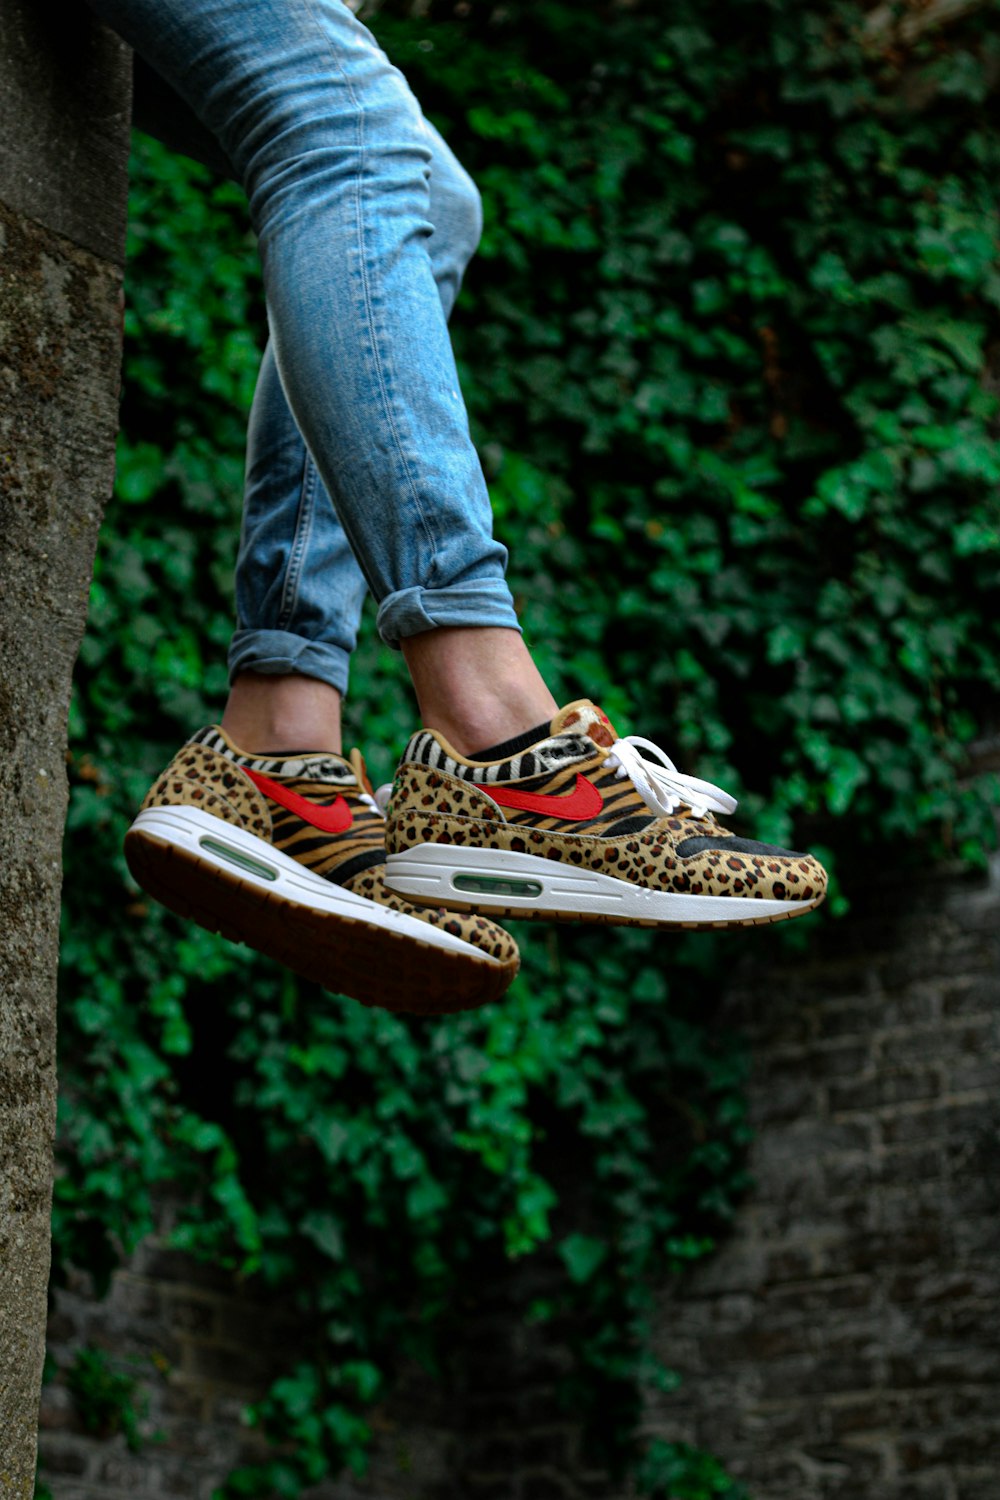 person wearing leopard print sneakers